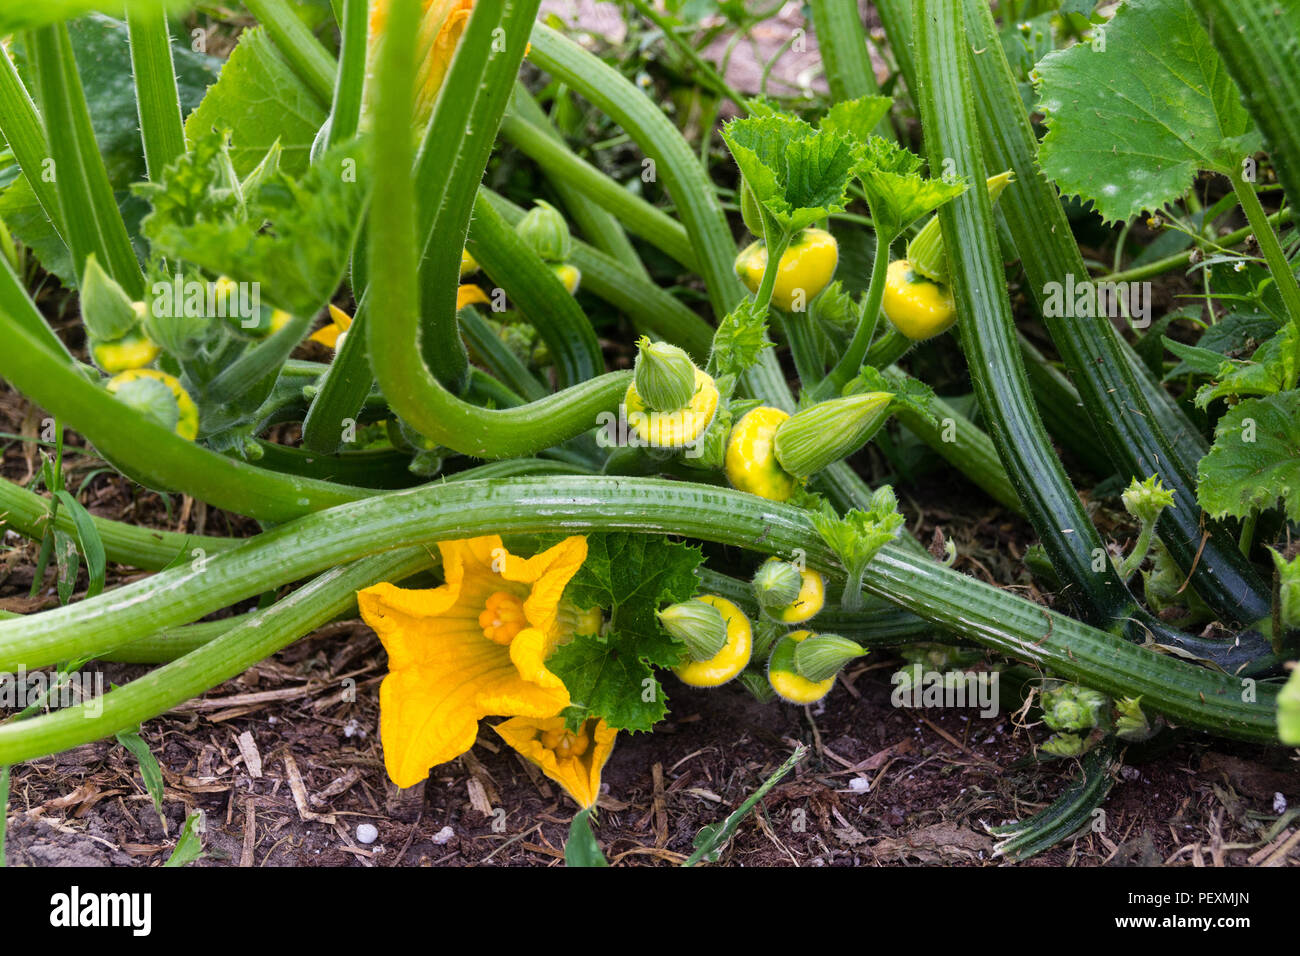 yellow pattypan squash growing on the plant Stock Photo - Alamy